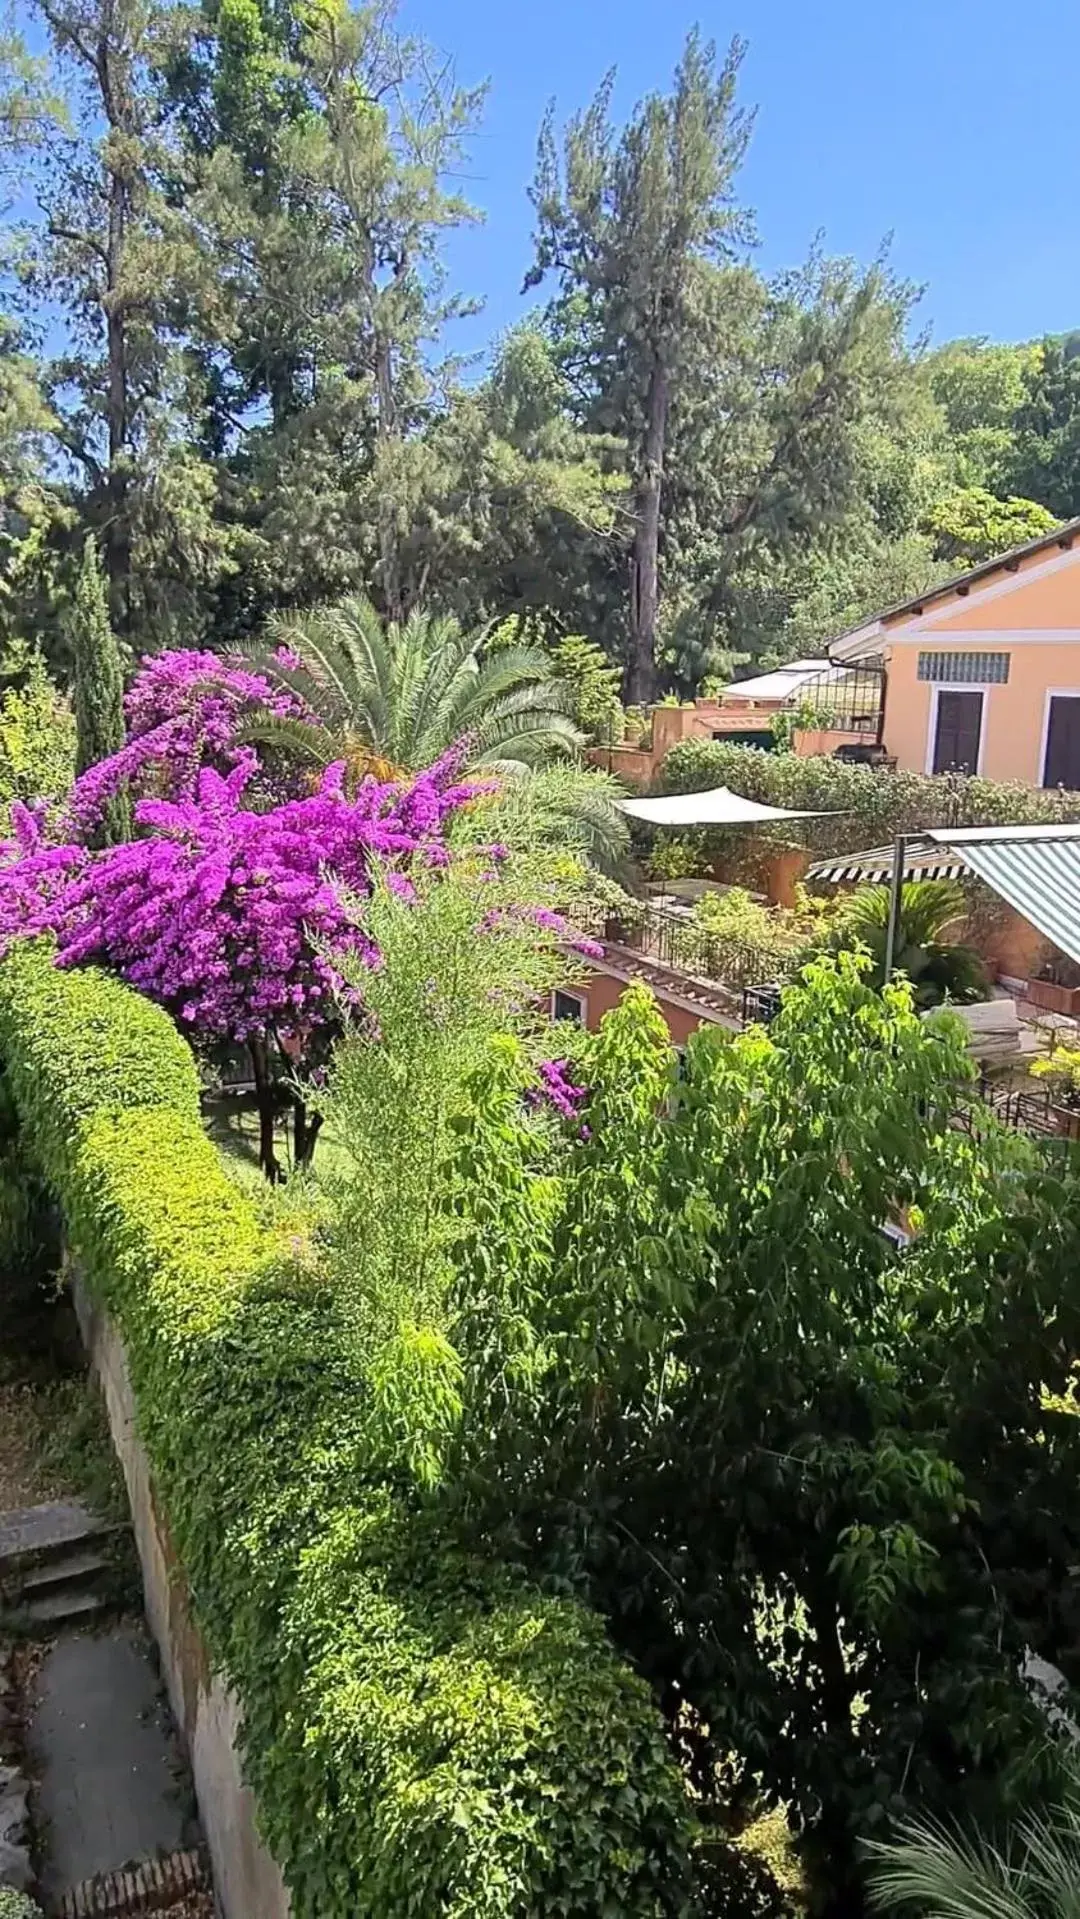 Bird's eye view in Villa Riari Garden